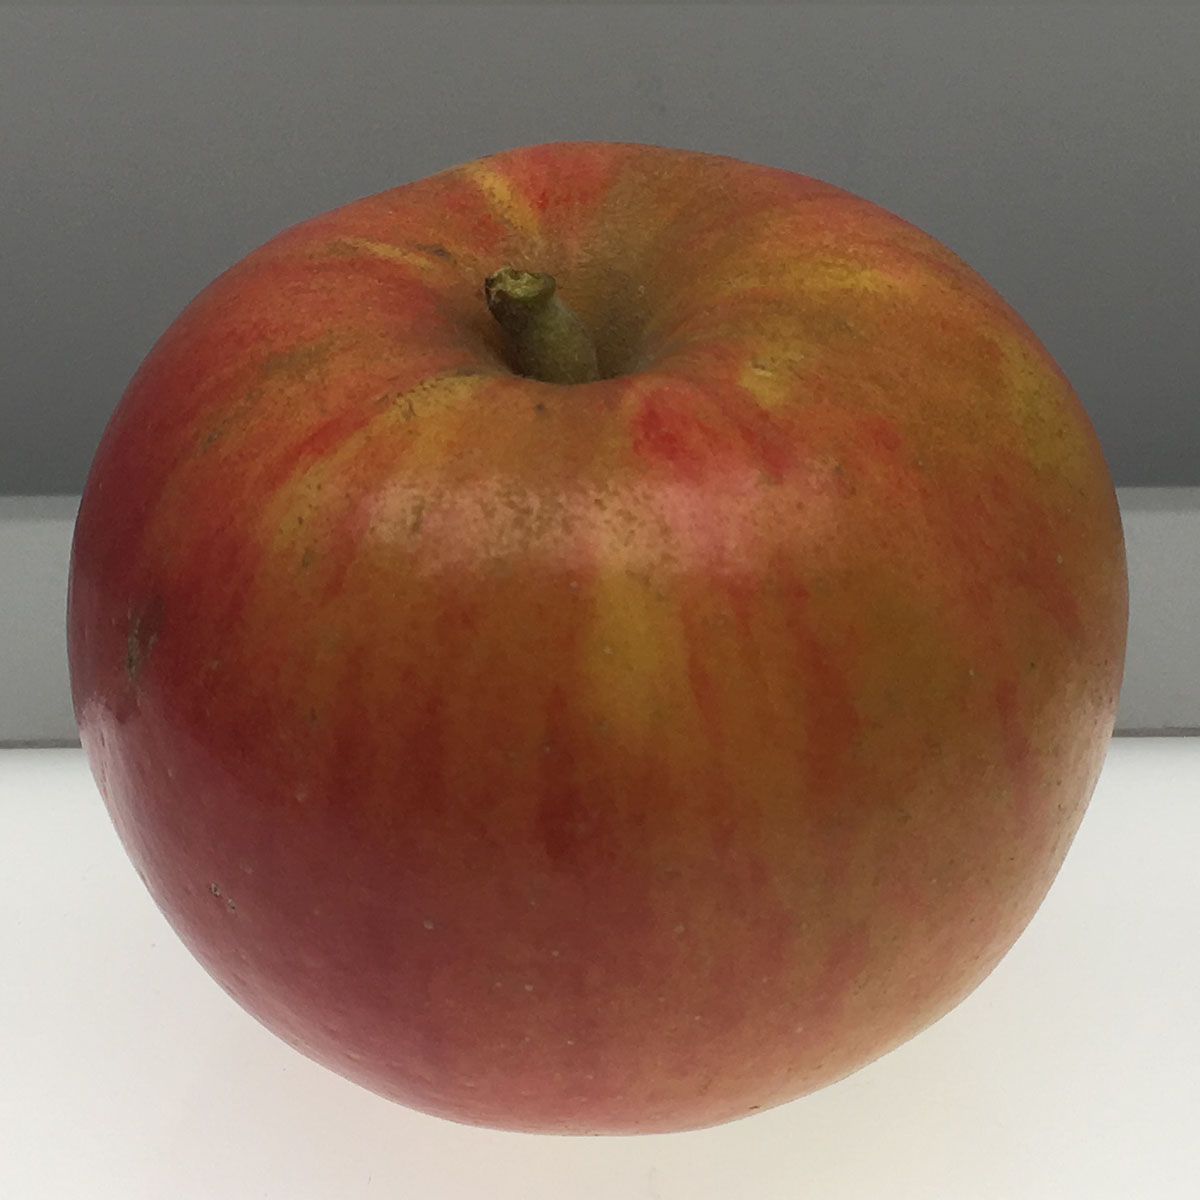 Ribston Pippin apple